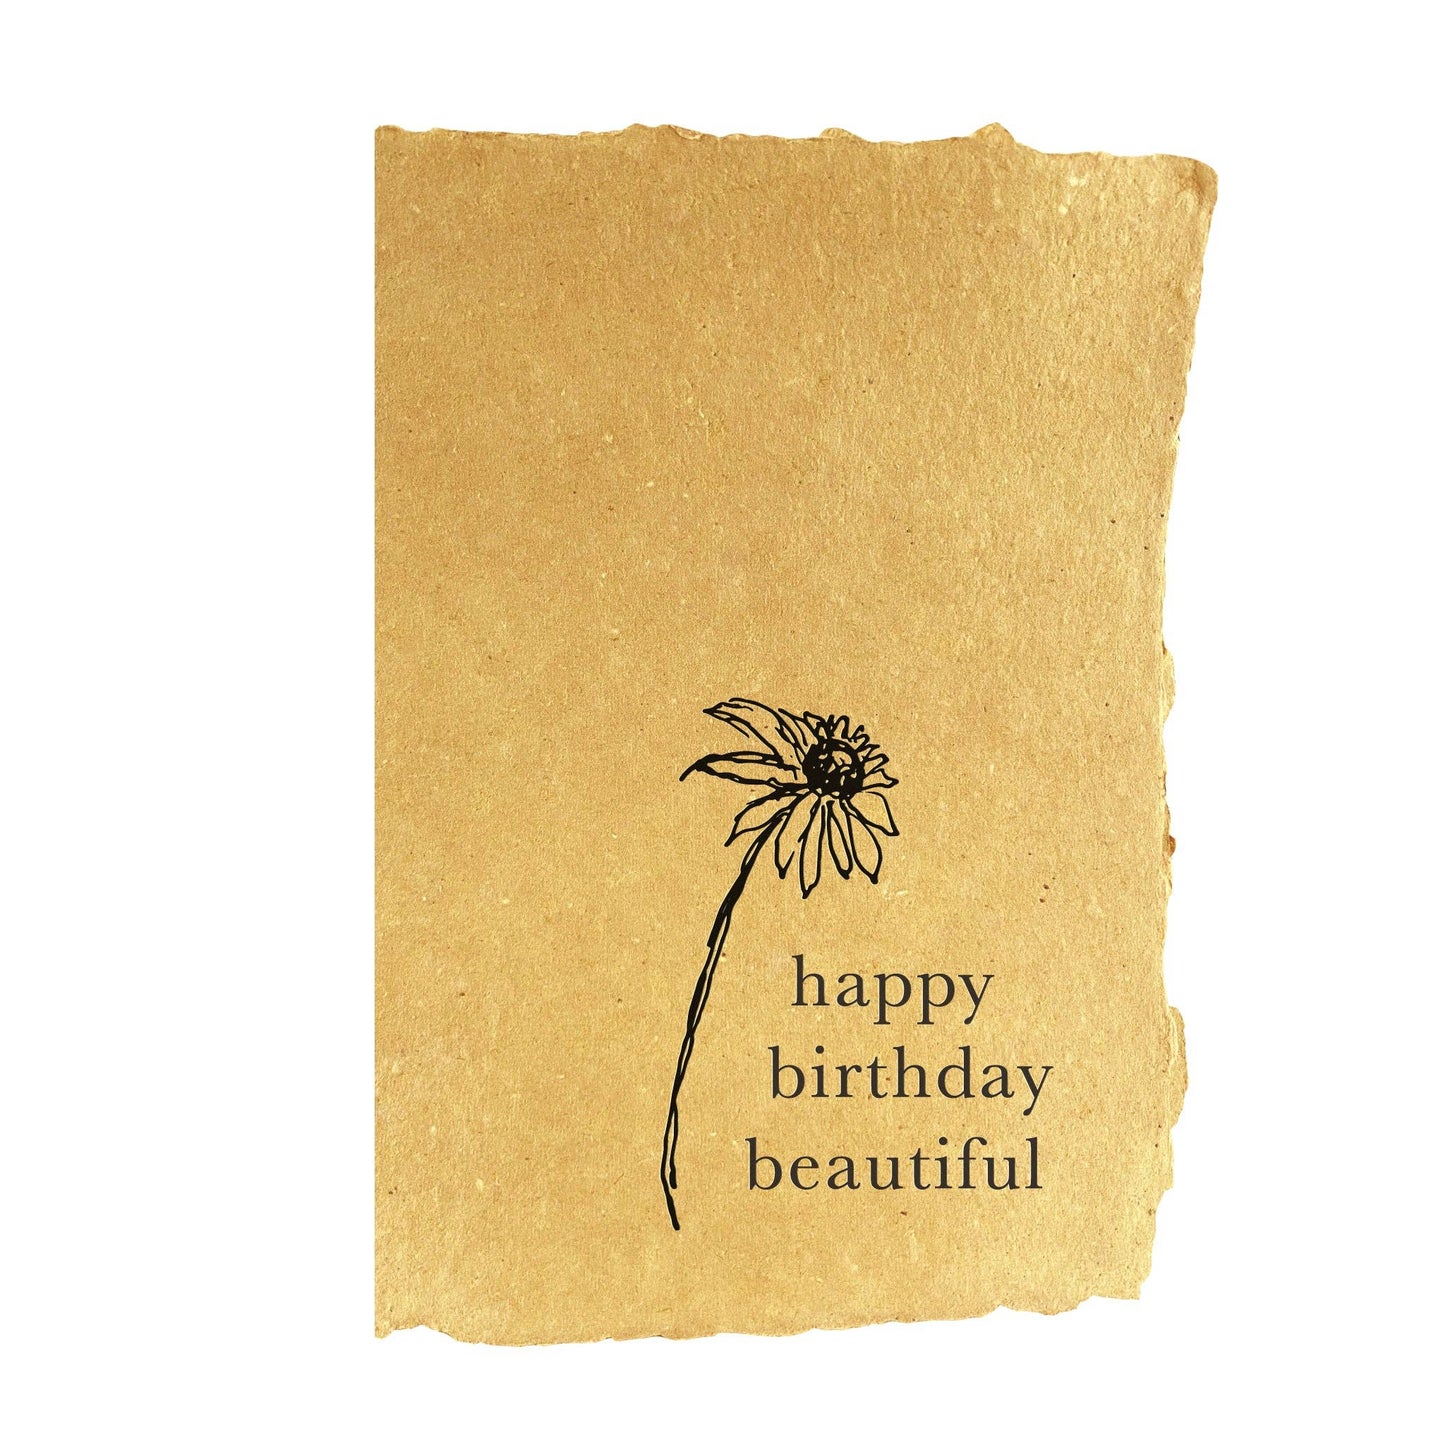 Happy birthday beautiful flower Greeting card | Handmade birthday card